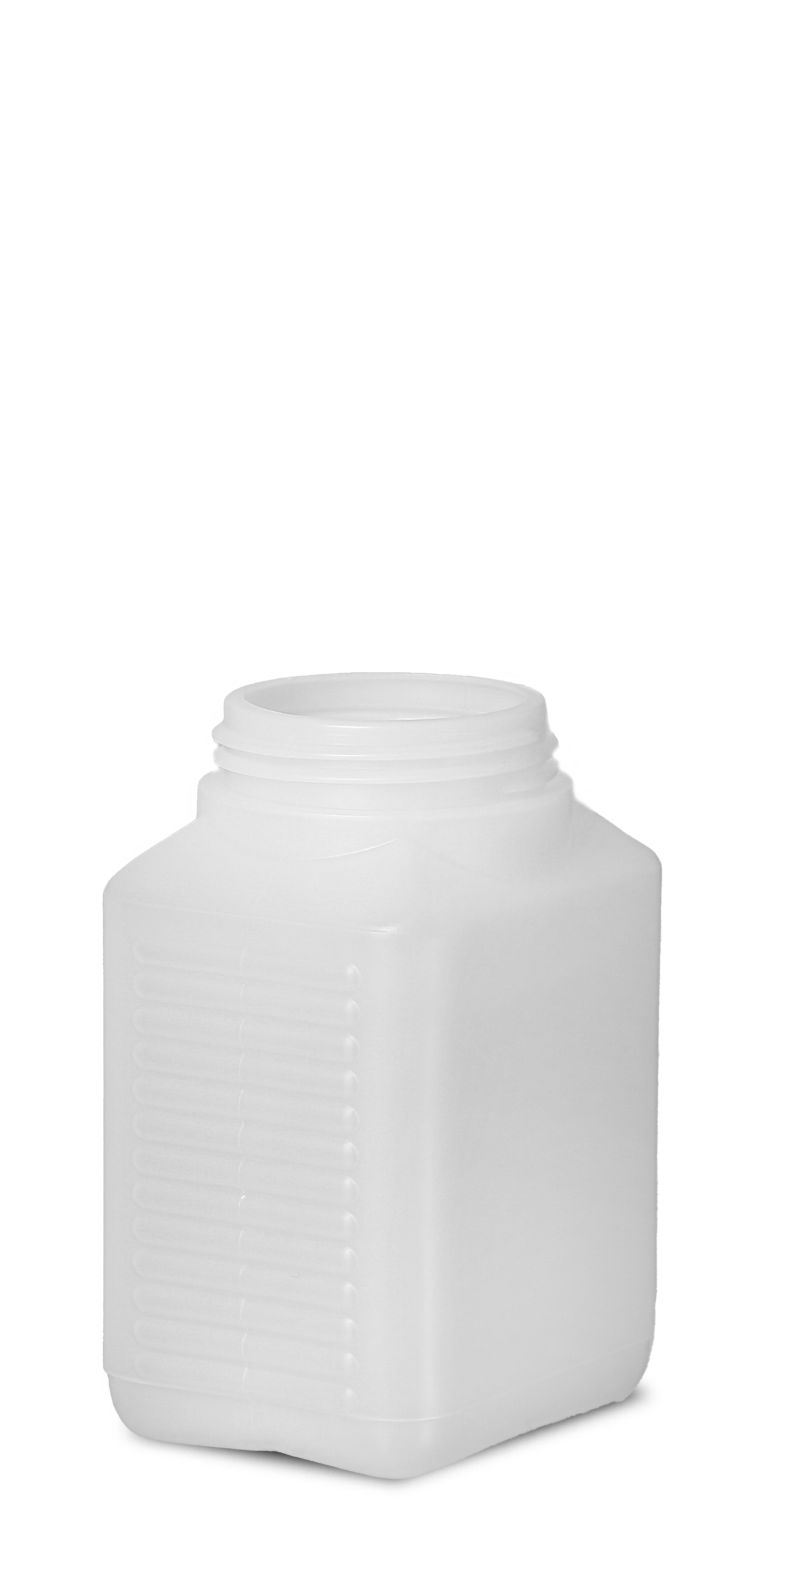 500 ml HDPE Weithalsflasche